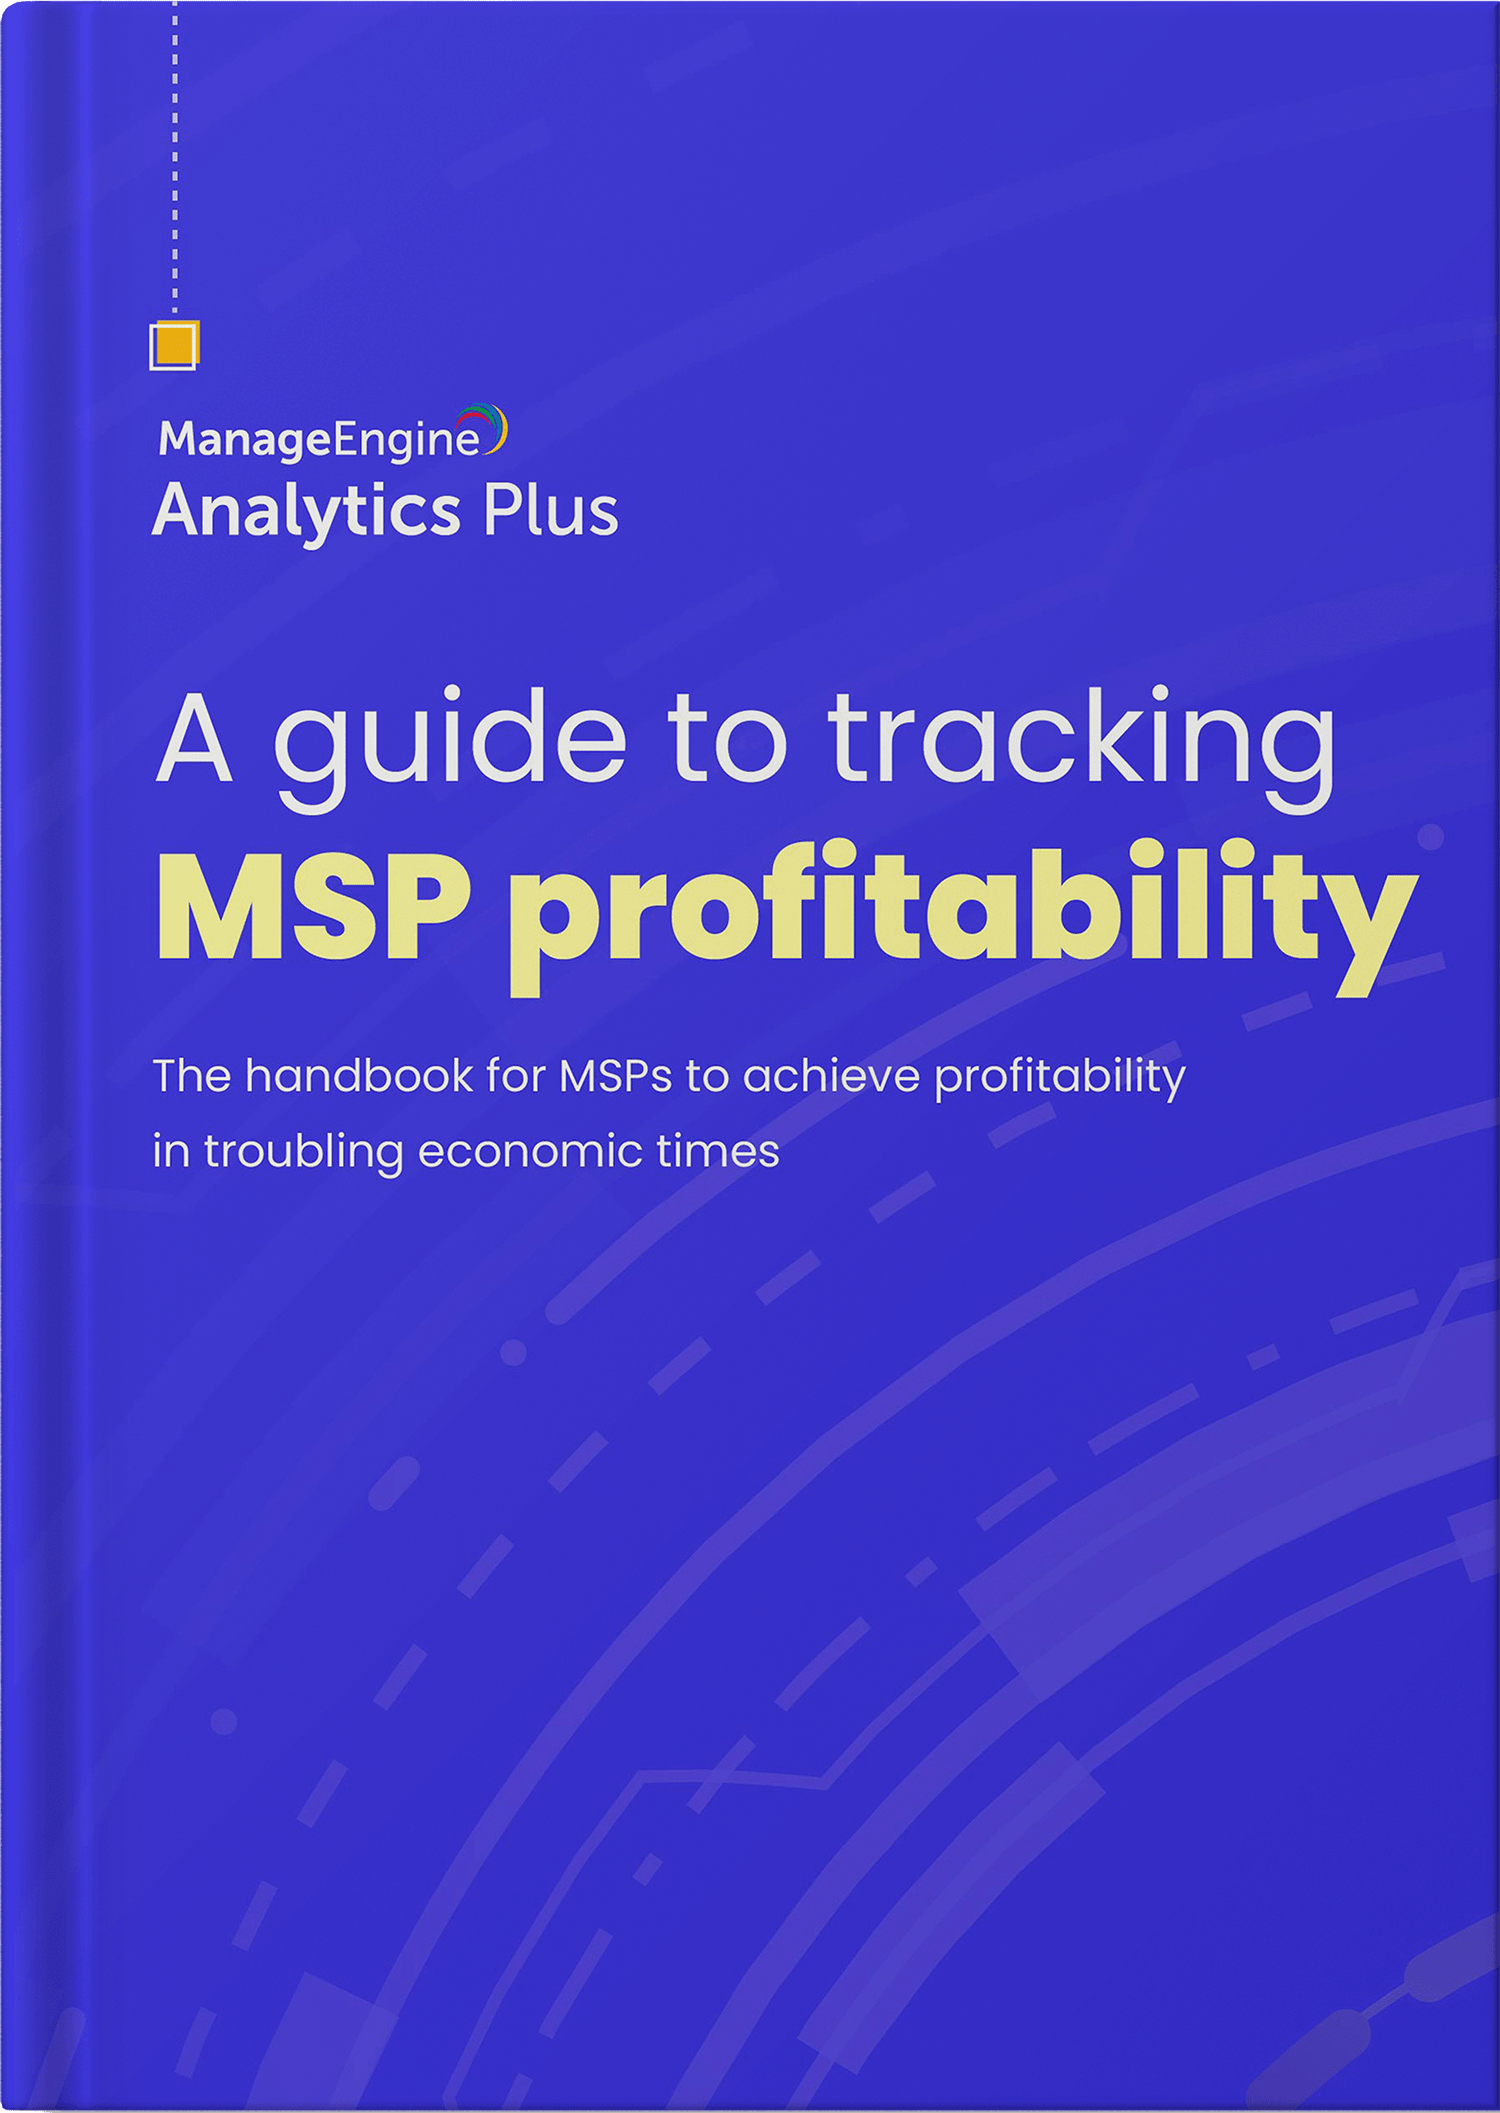 How MSPs can profitability using analytics